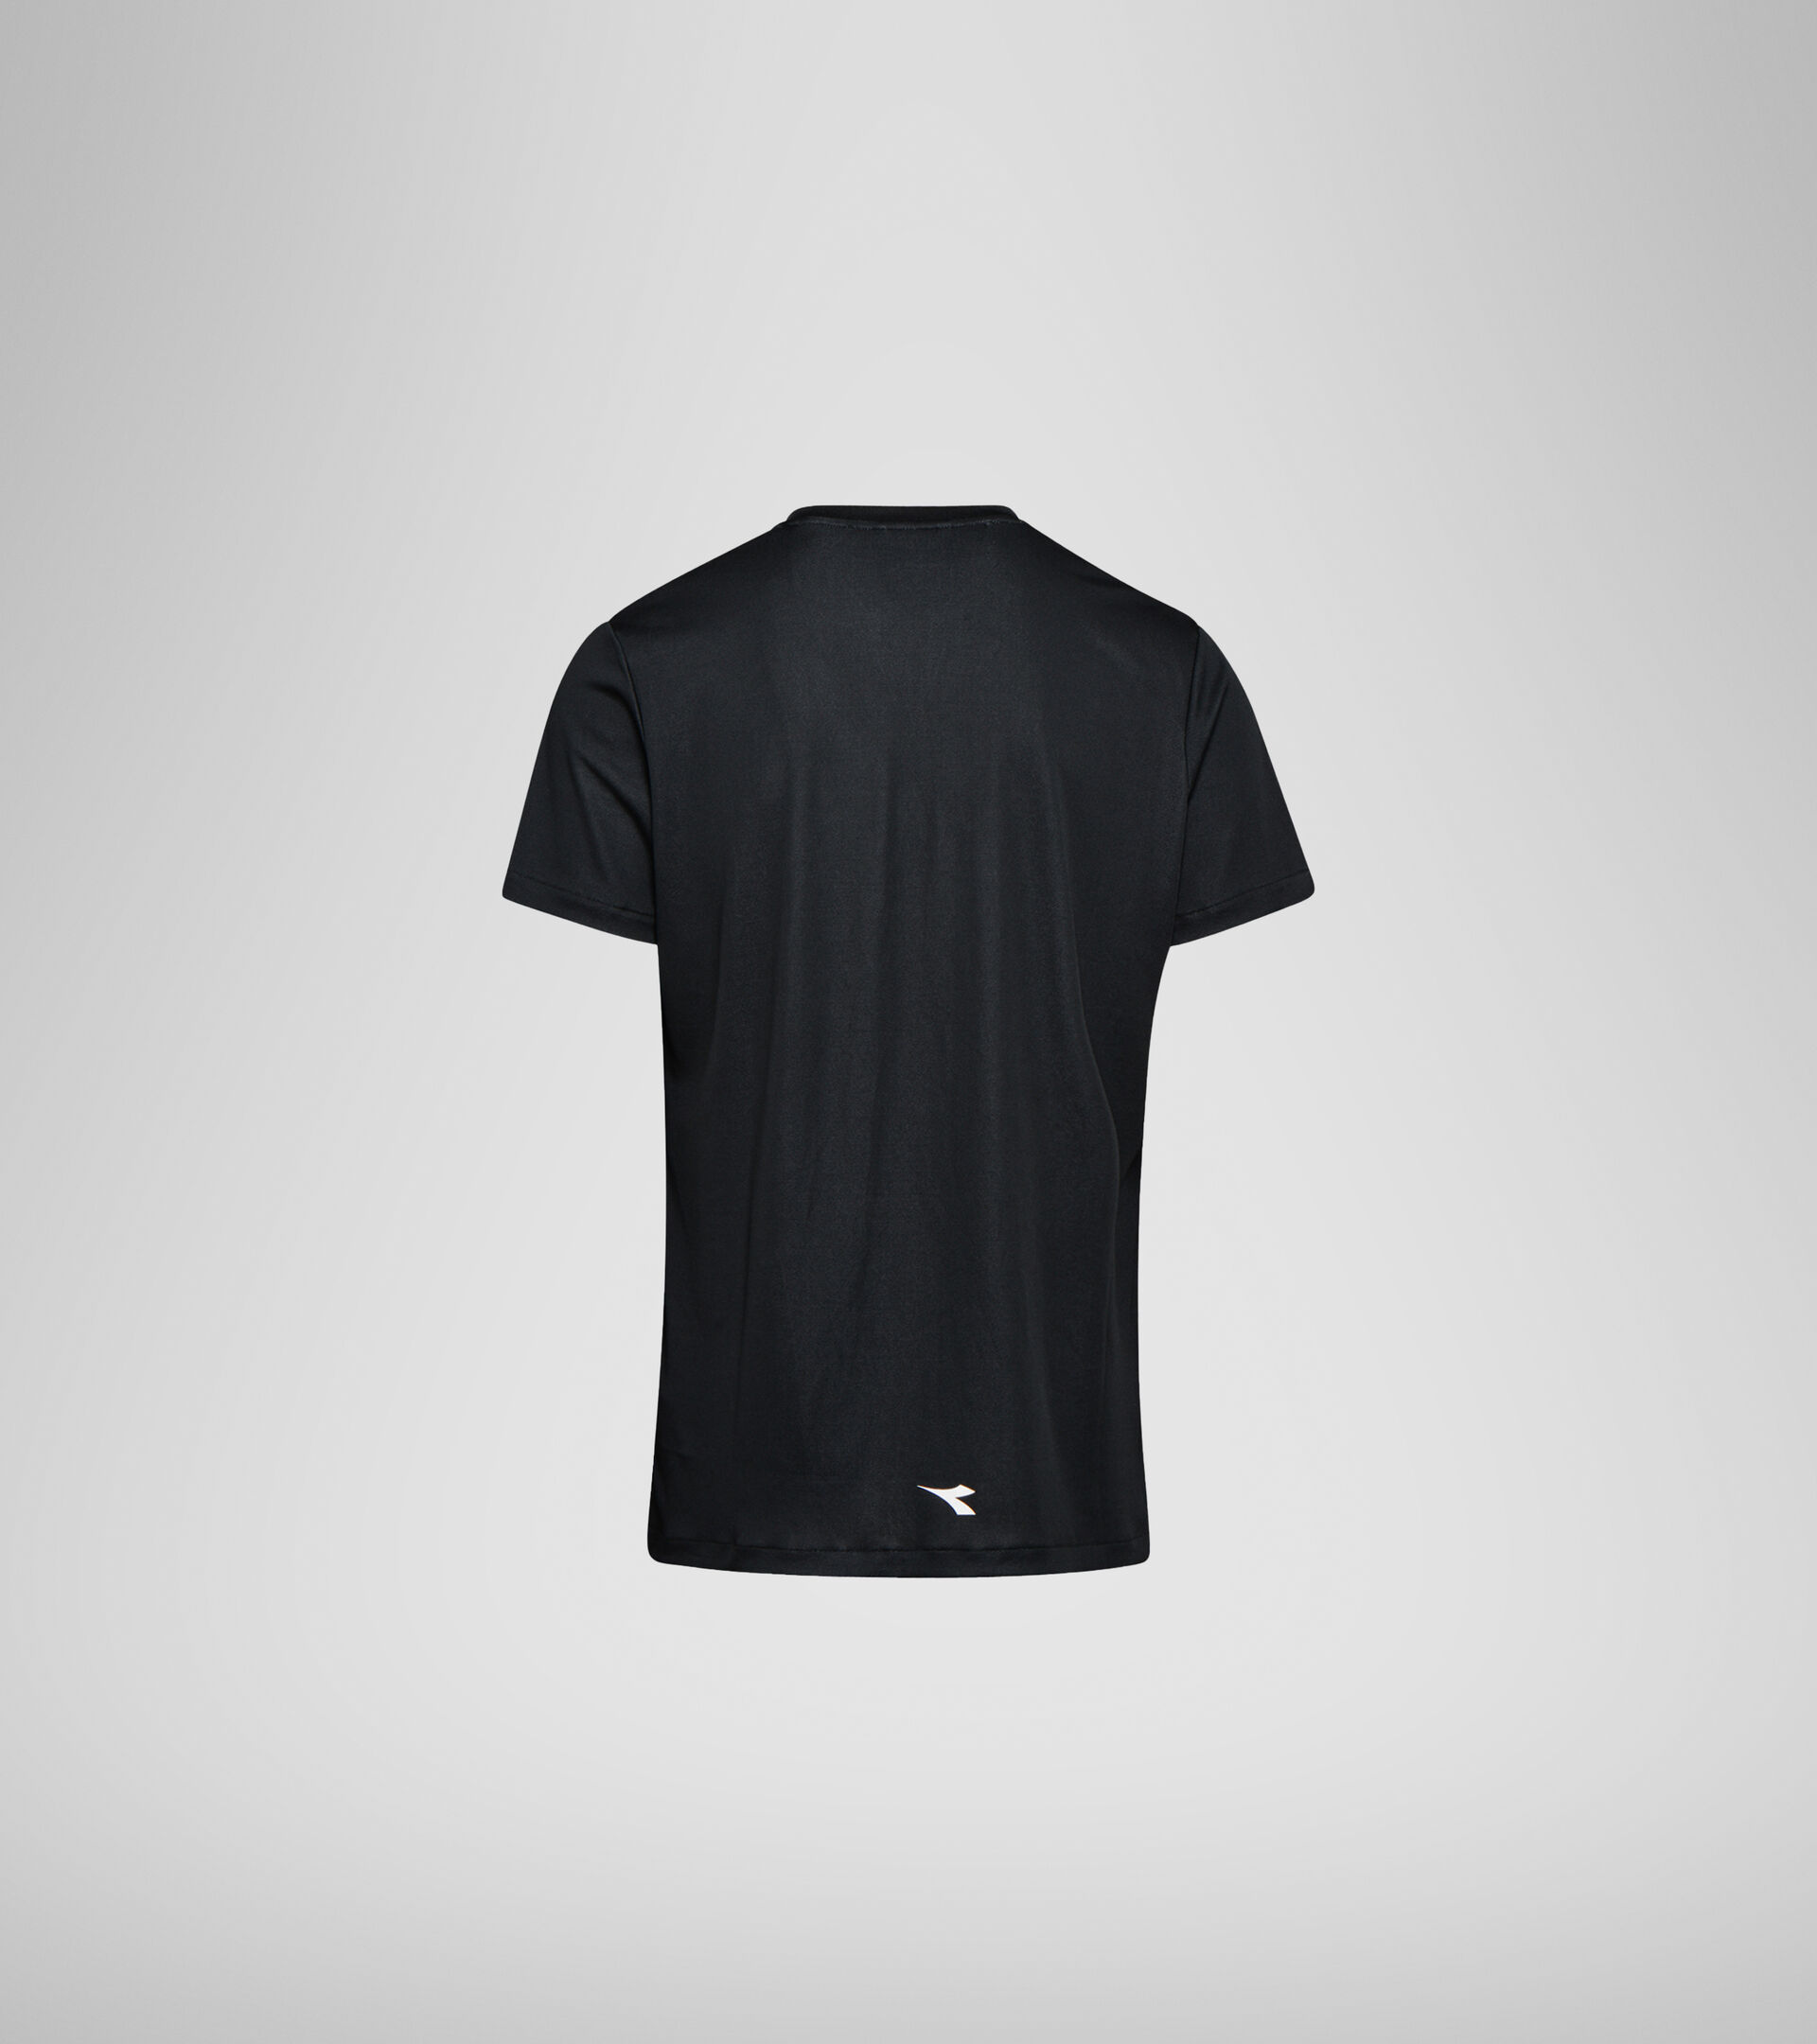 Tennis T-shirt - Men T-SHIRT EASY TENNIS BLACK - Diadora